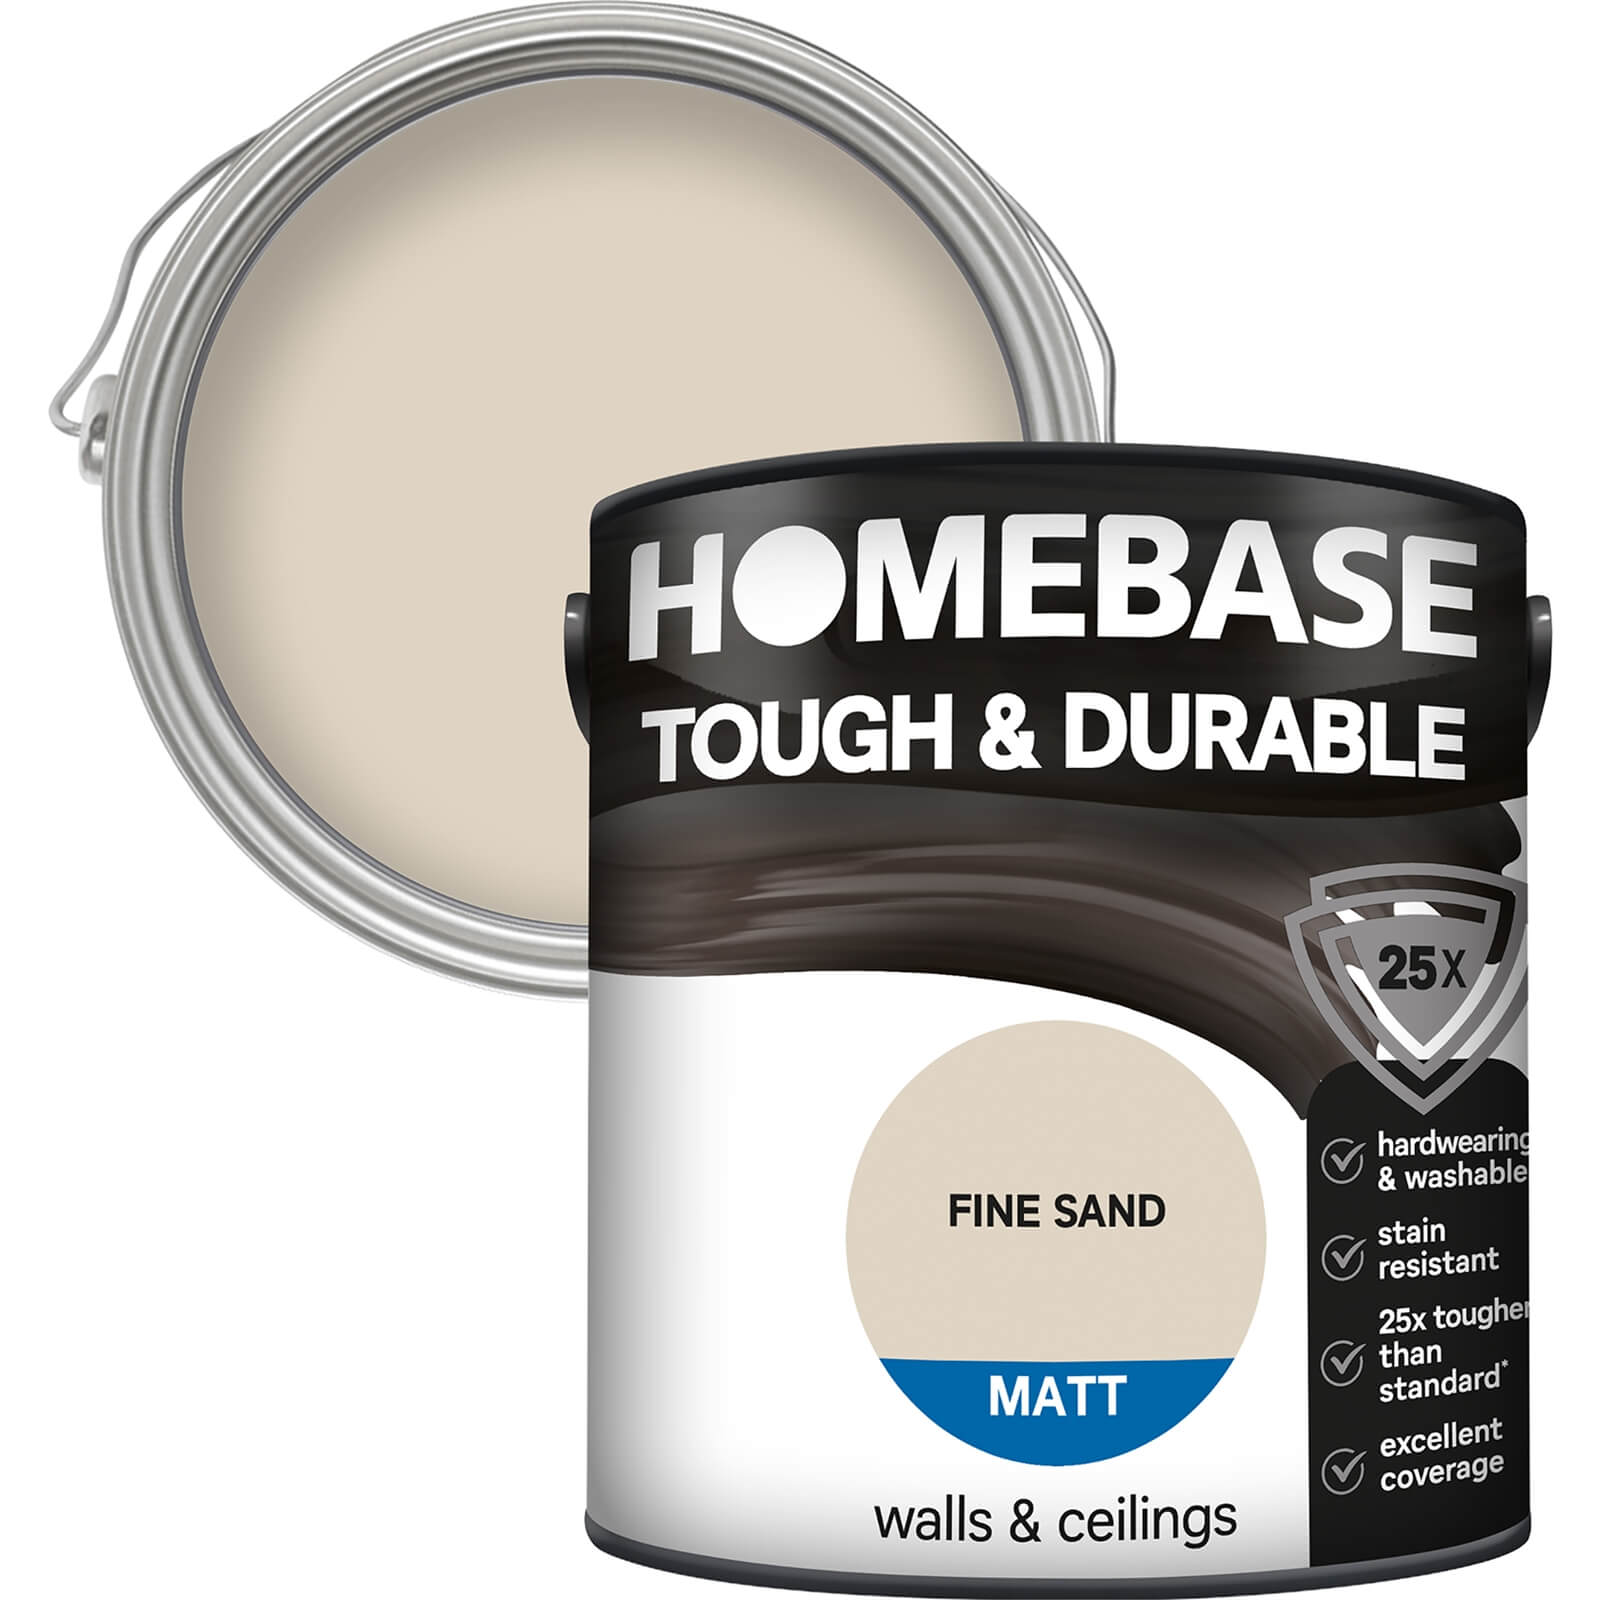 Homebase Tough & Durable Matt Paint Fine Sand - 2.5L